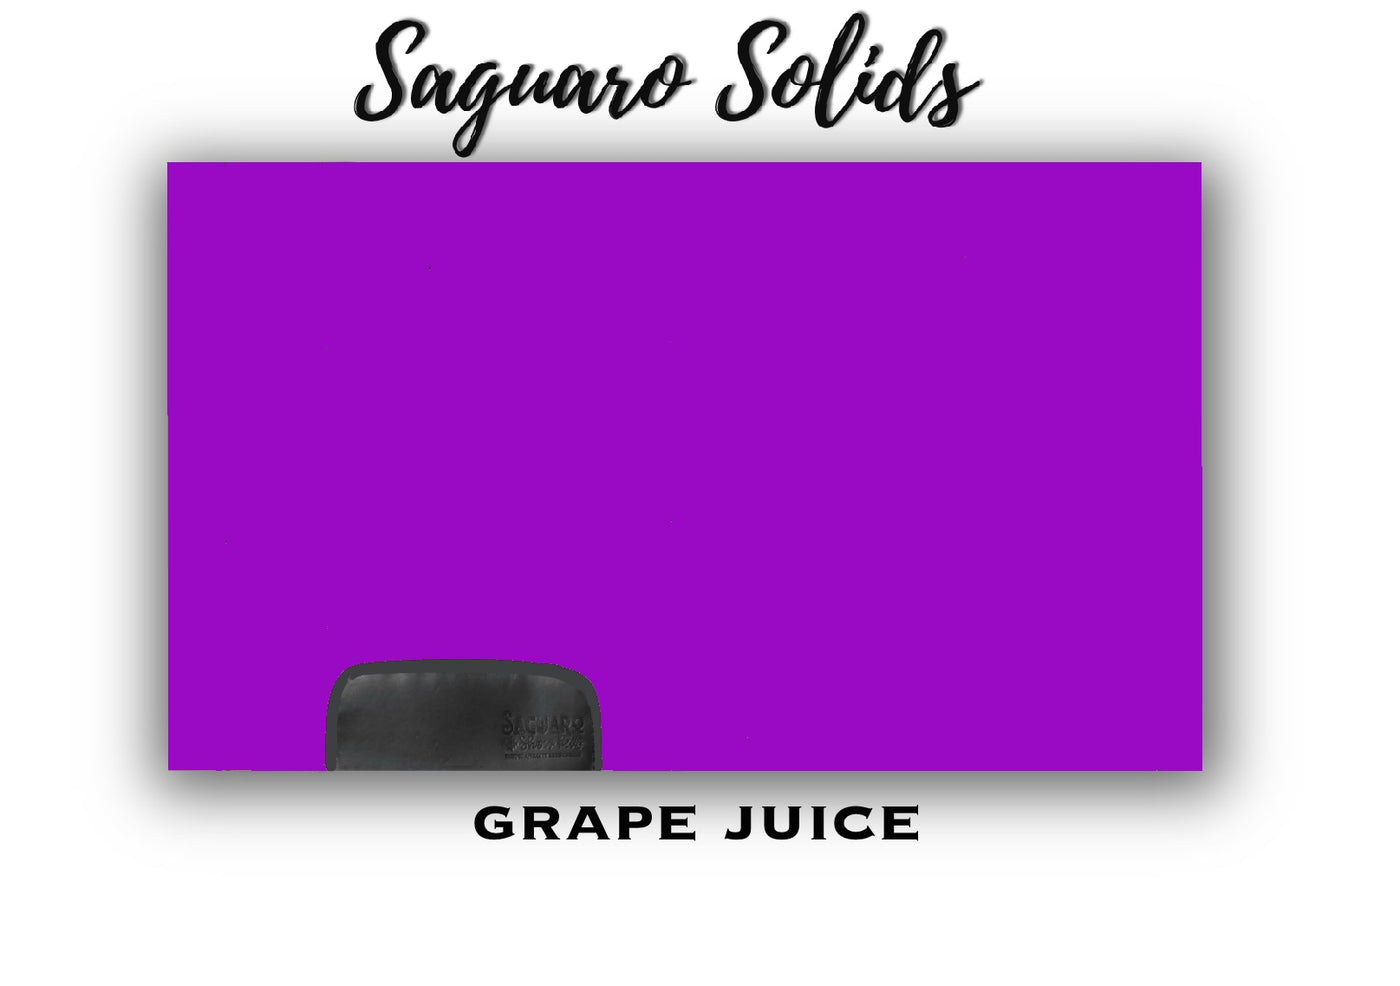 Saguaro Solid "Grape Juice" Show Pad (SEMI-CUSTOM)